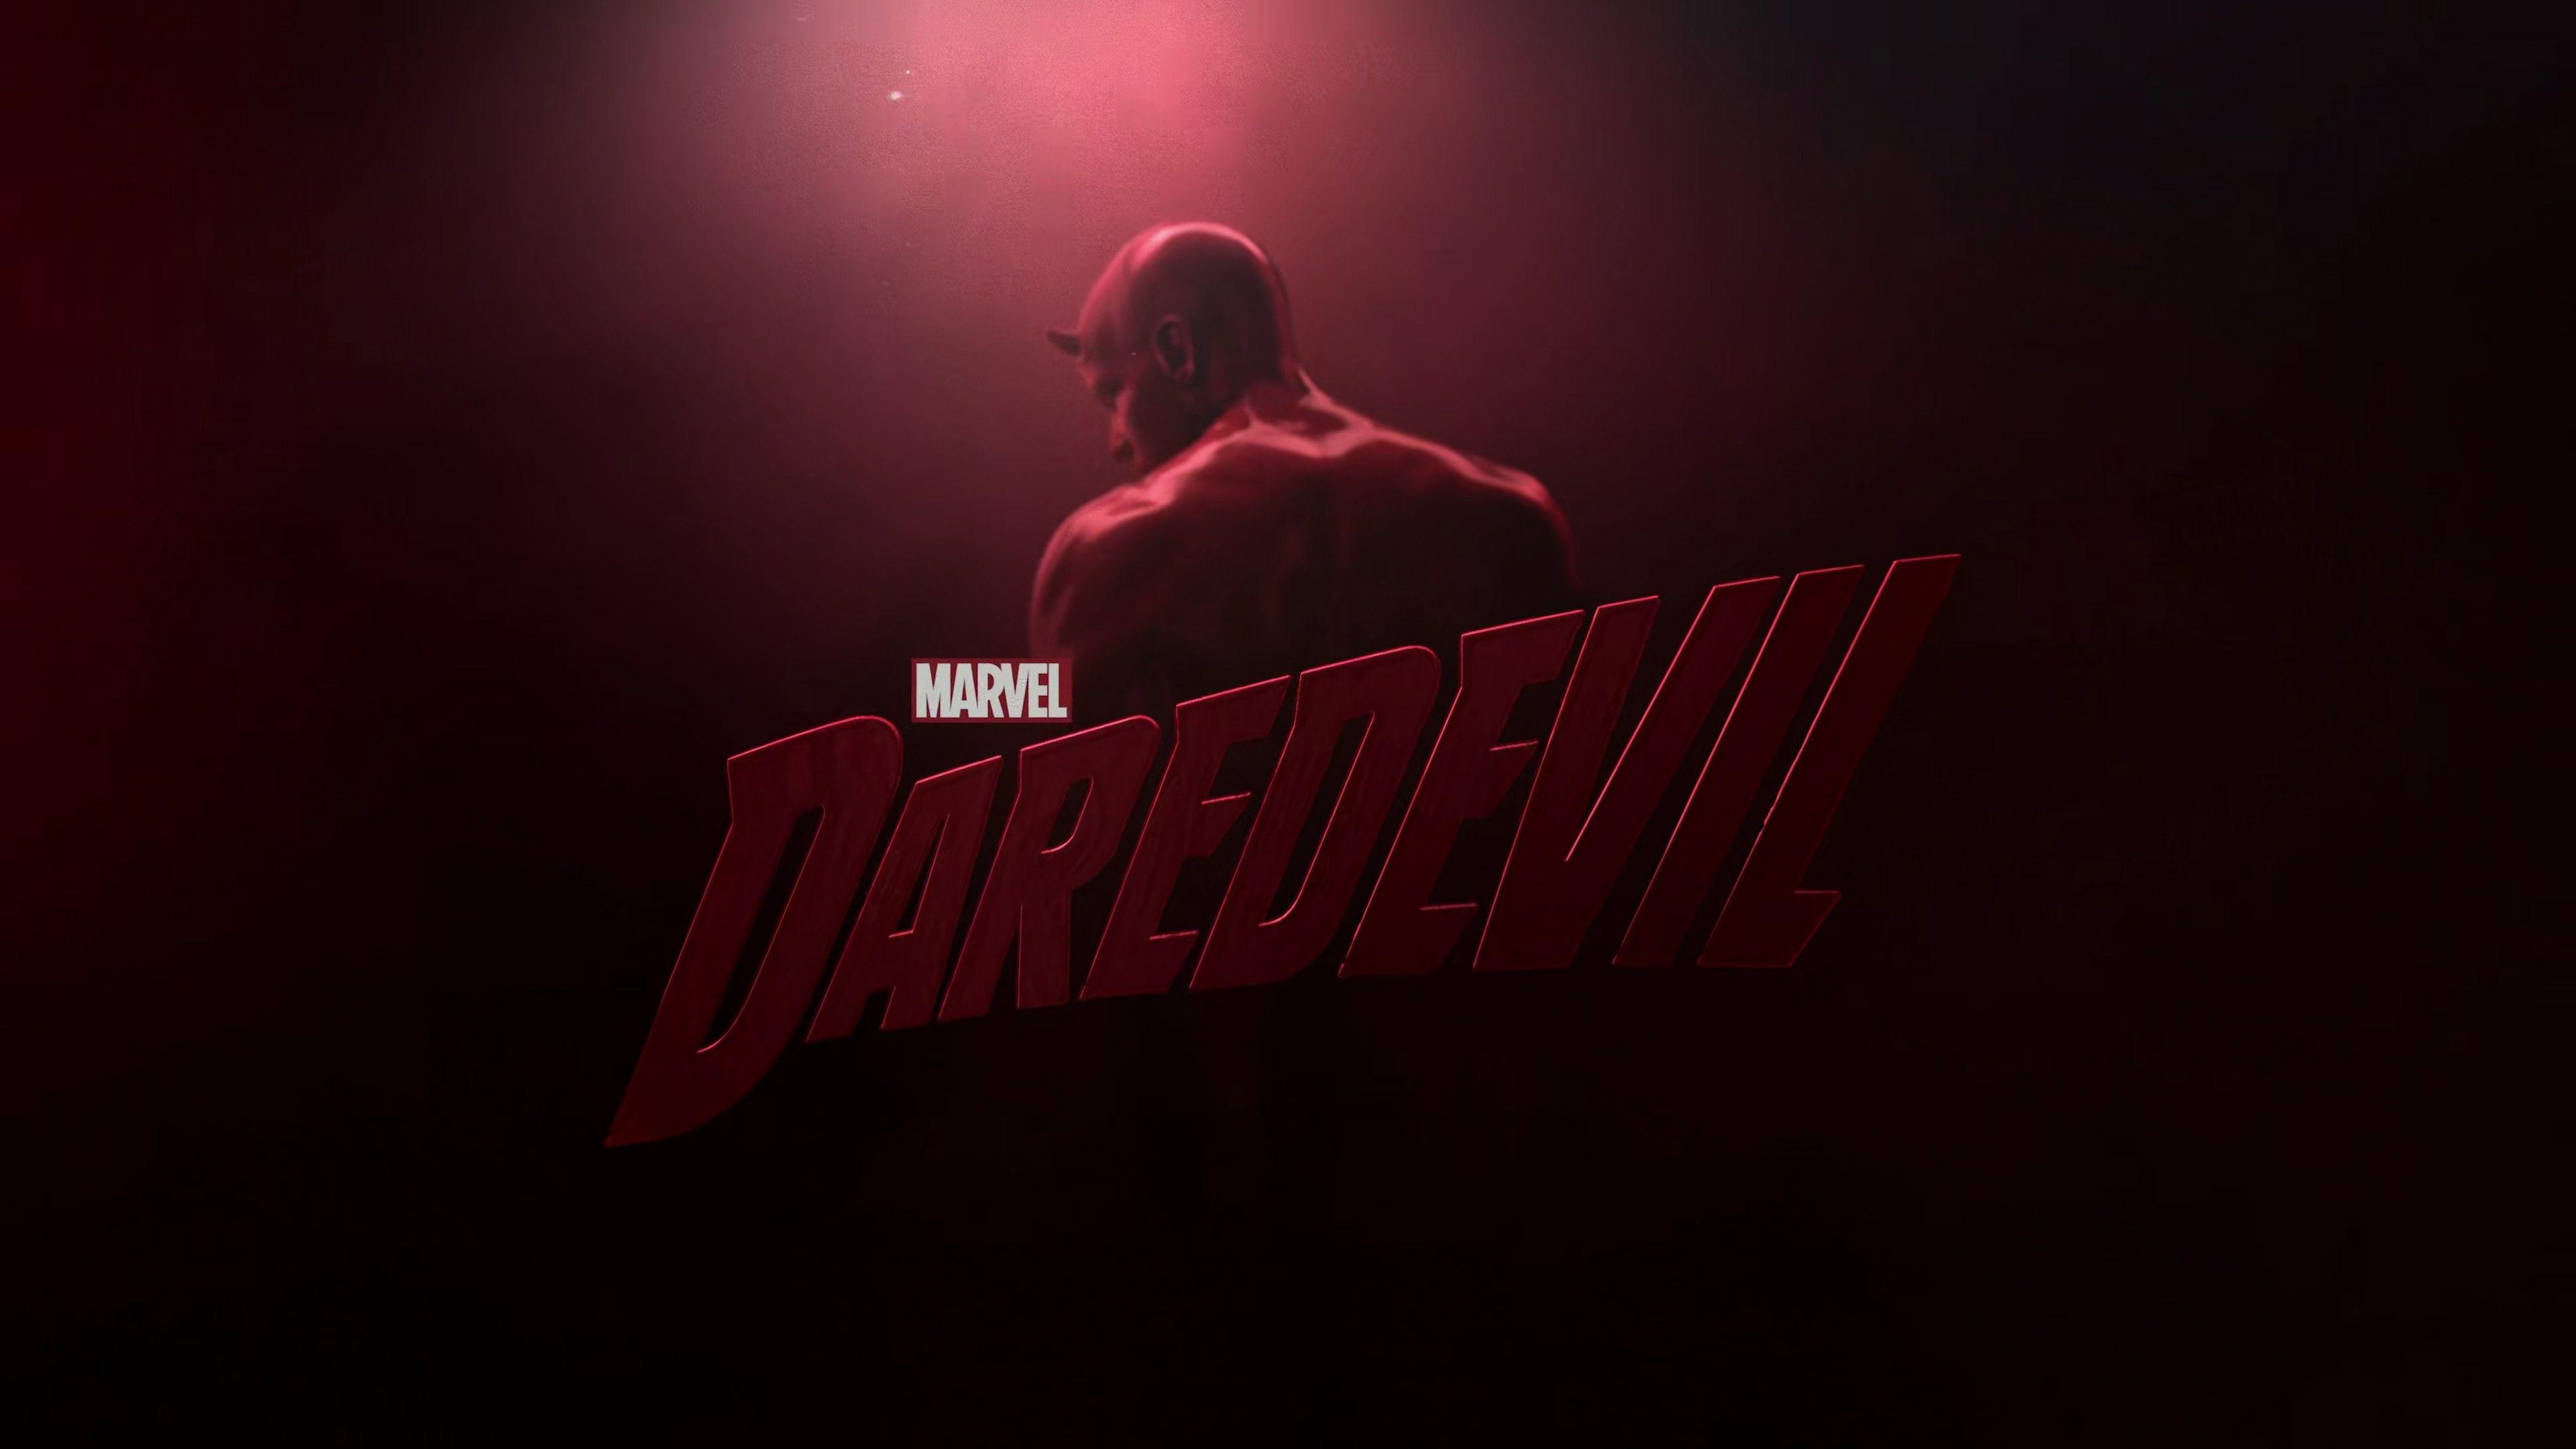 Daredevil Wallpapers  Top 30 Best Daredevil Backgrounds Download